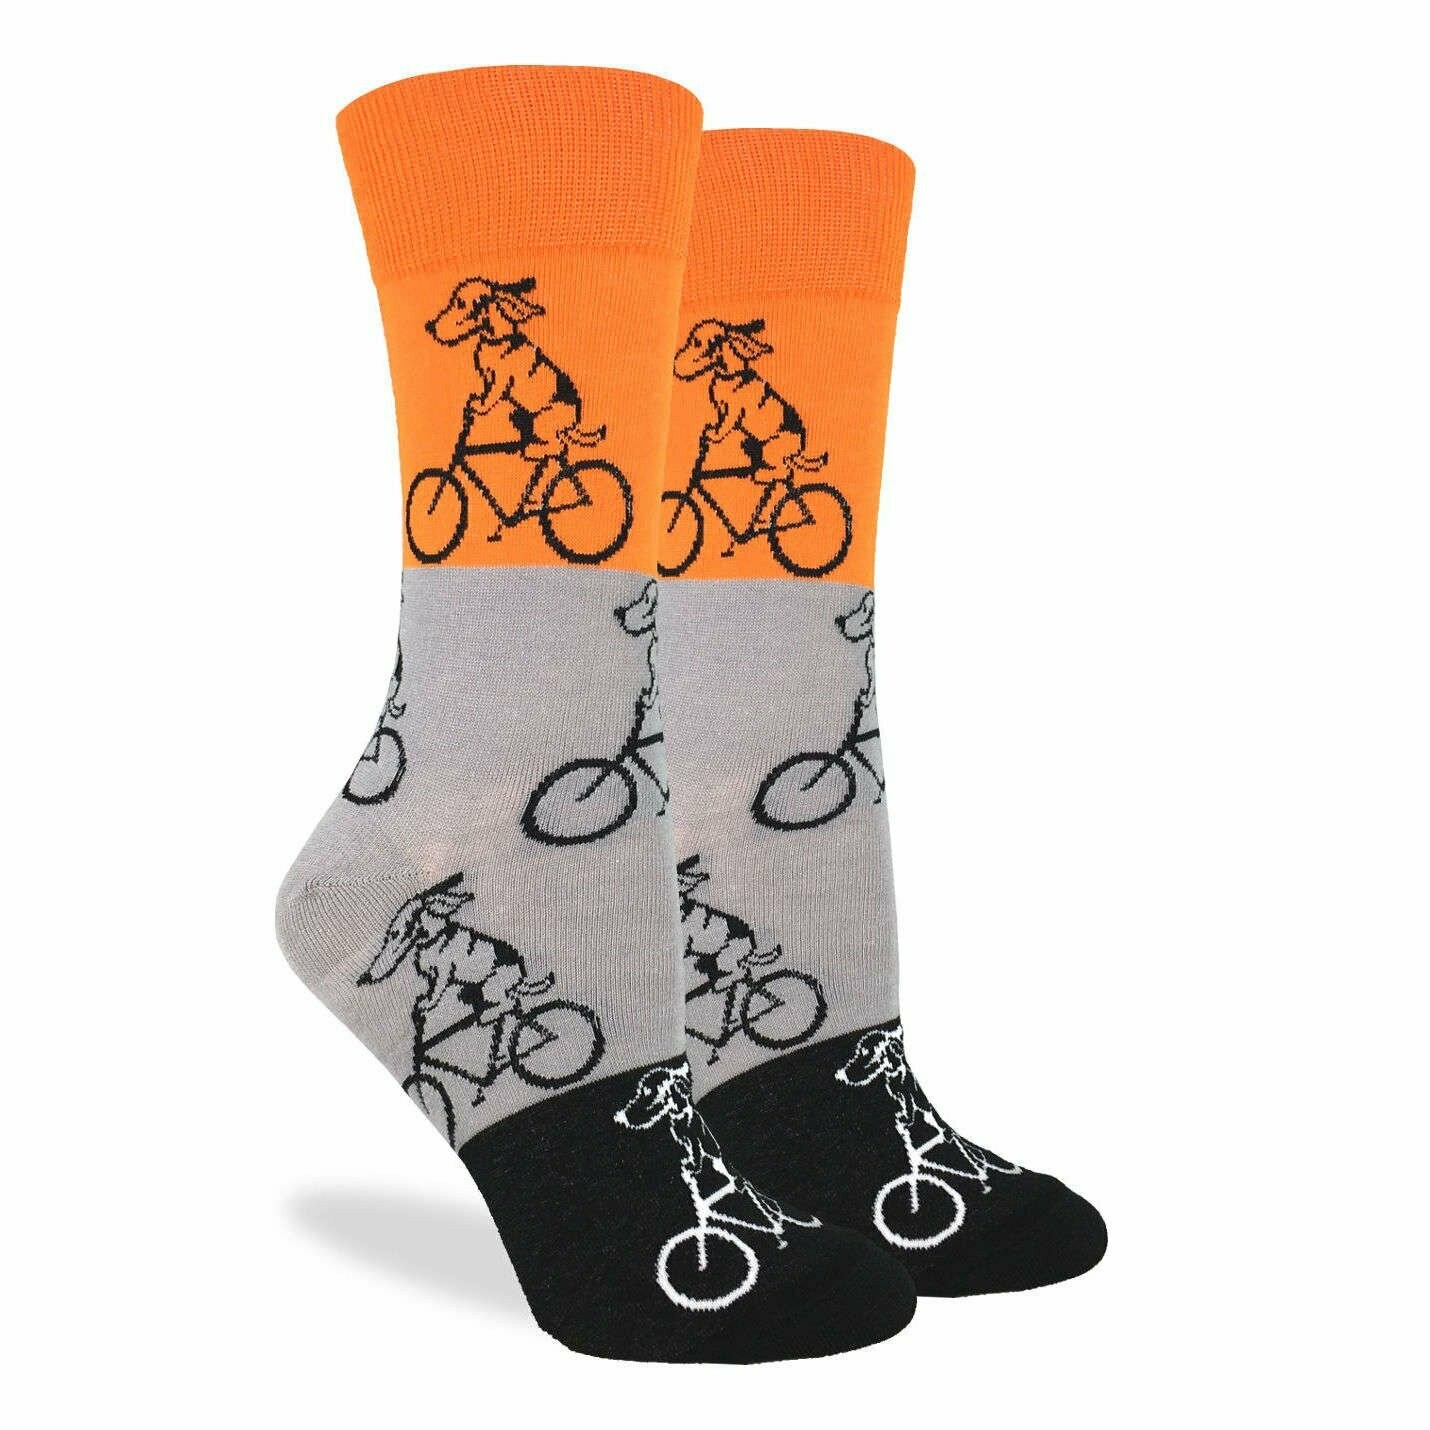 Orange Dogs on Bikes socks | M/L adult sizes | Good Luck Sock